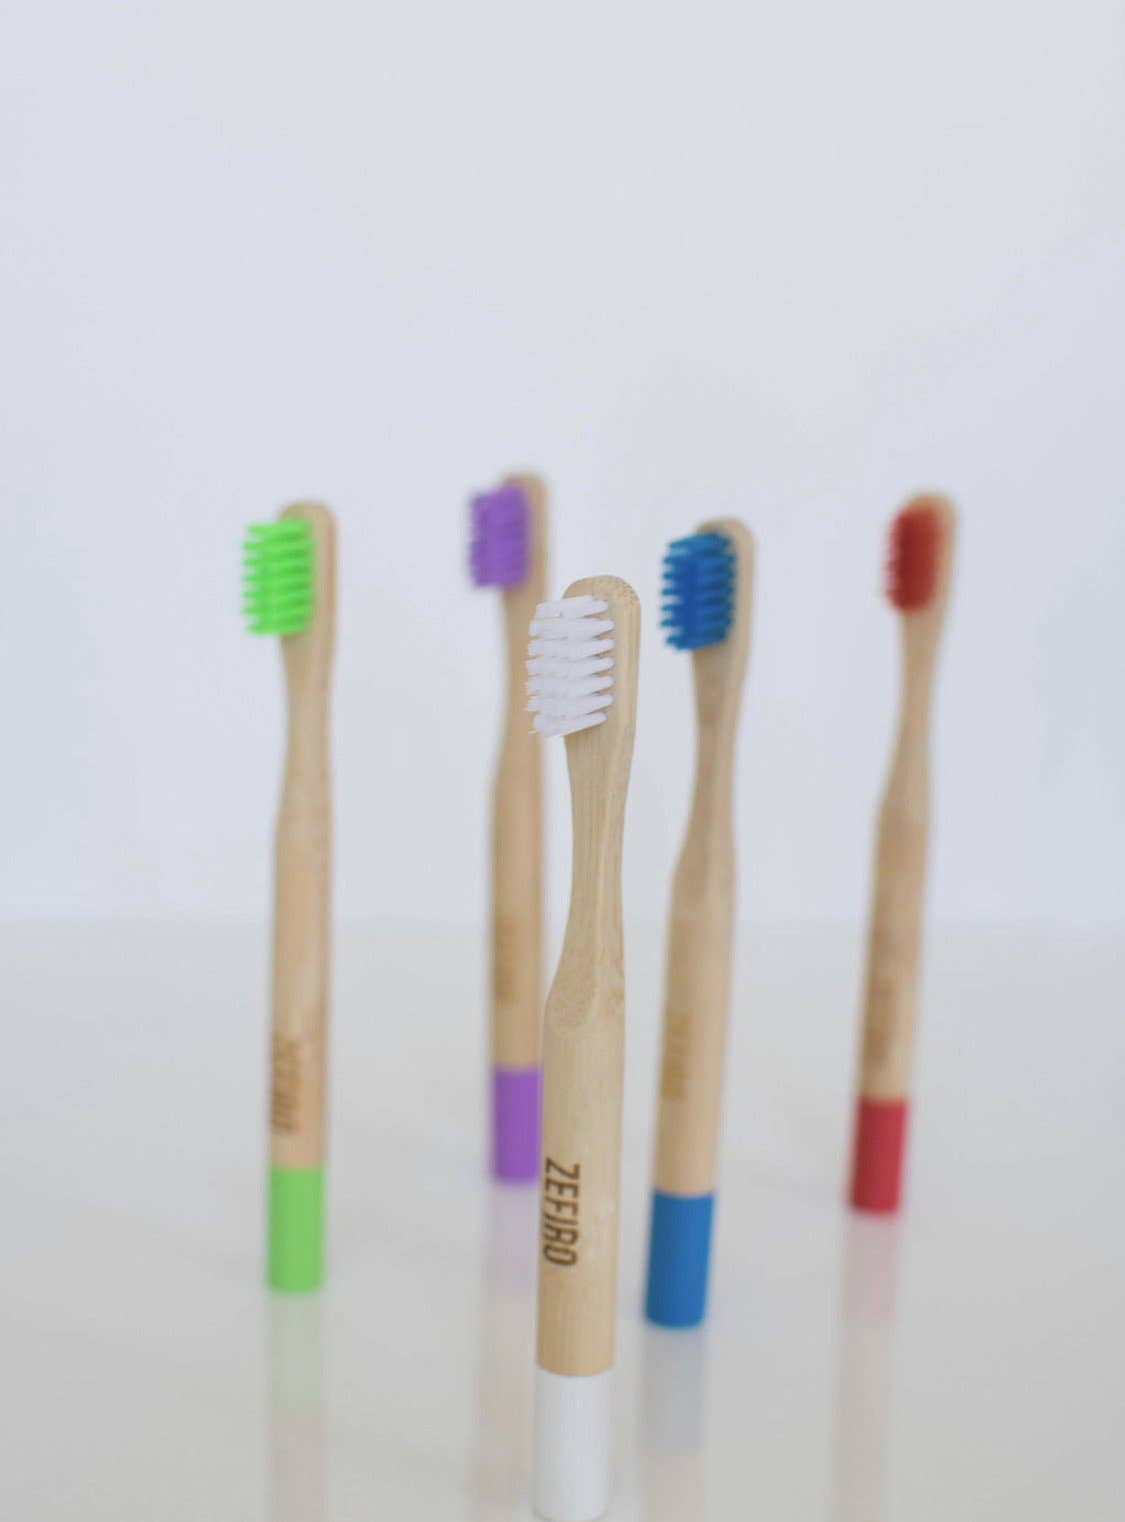 Bamboo Kid's Toothbrush - Red